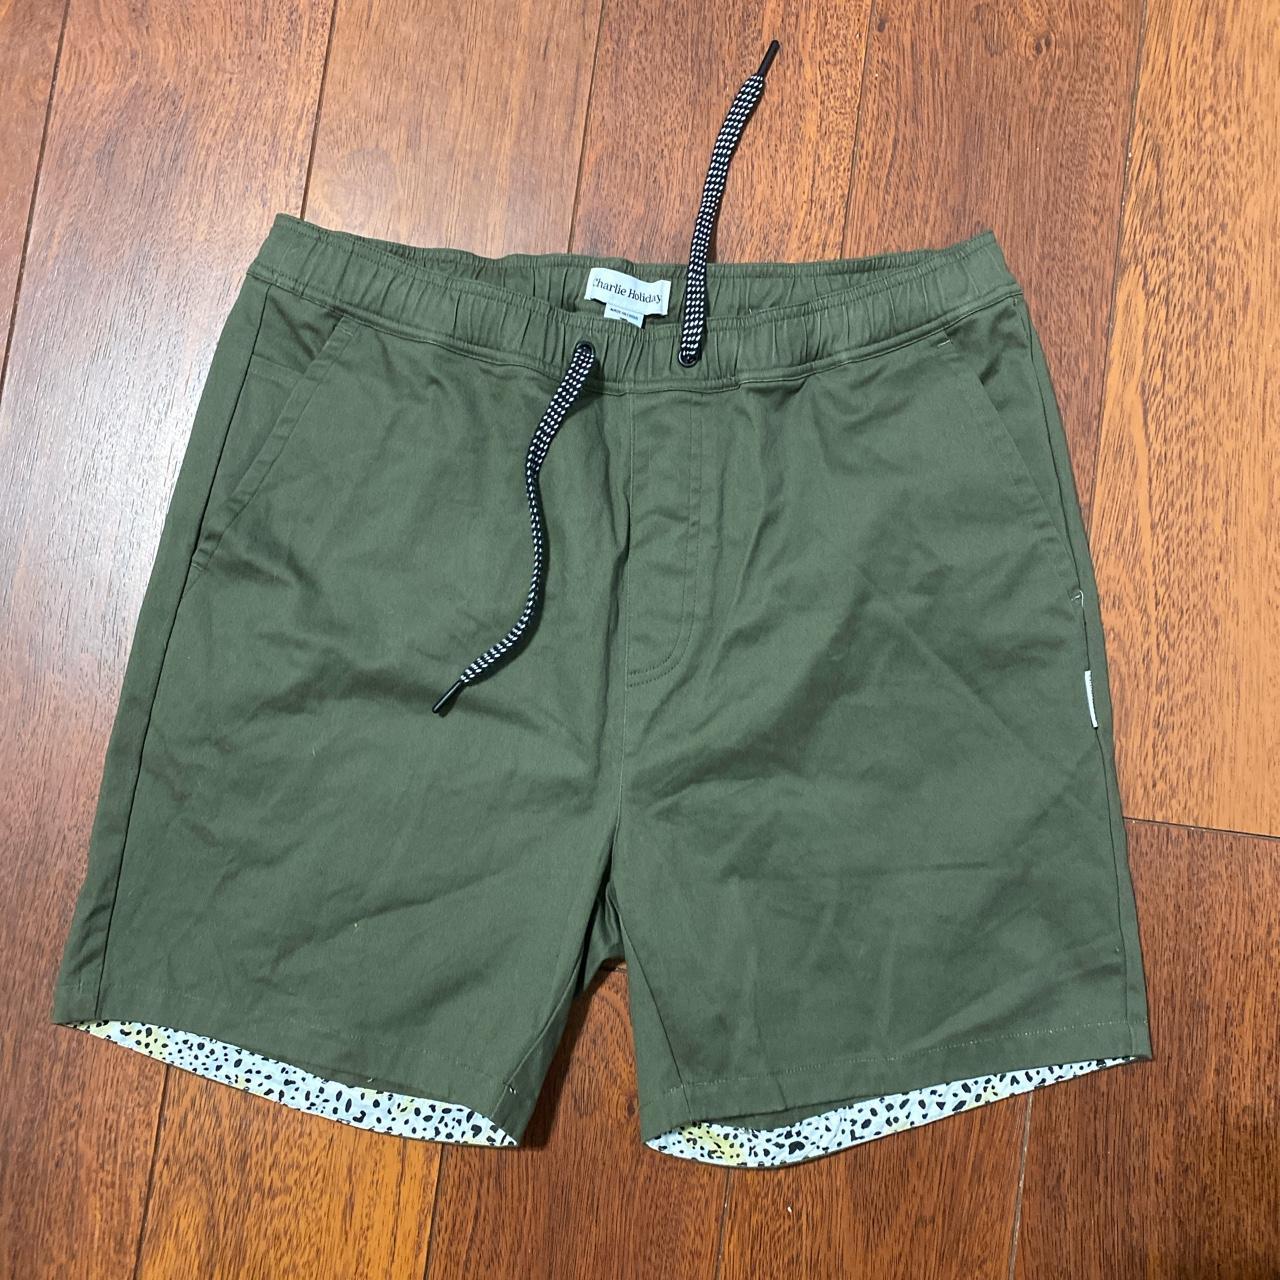 Product Image 1 - Mens Dark Green Shorts
Size: 36
Brand: